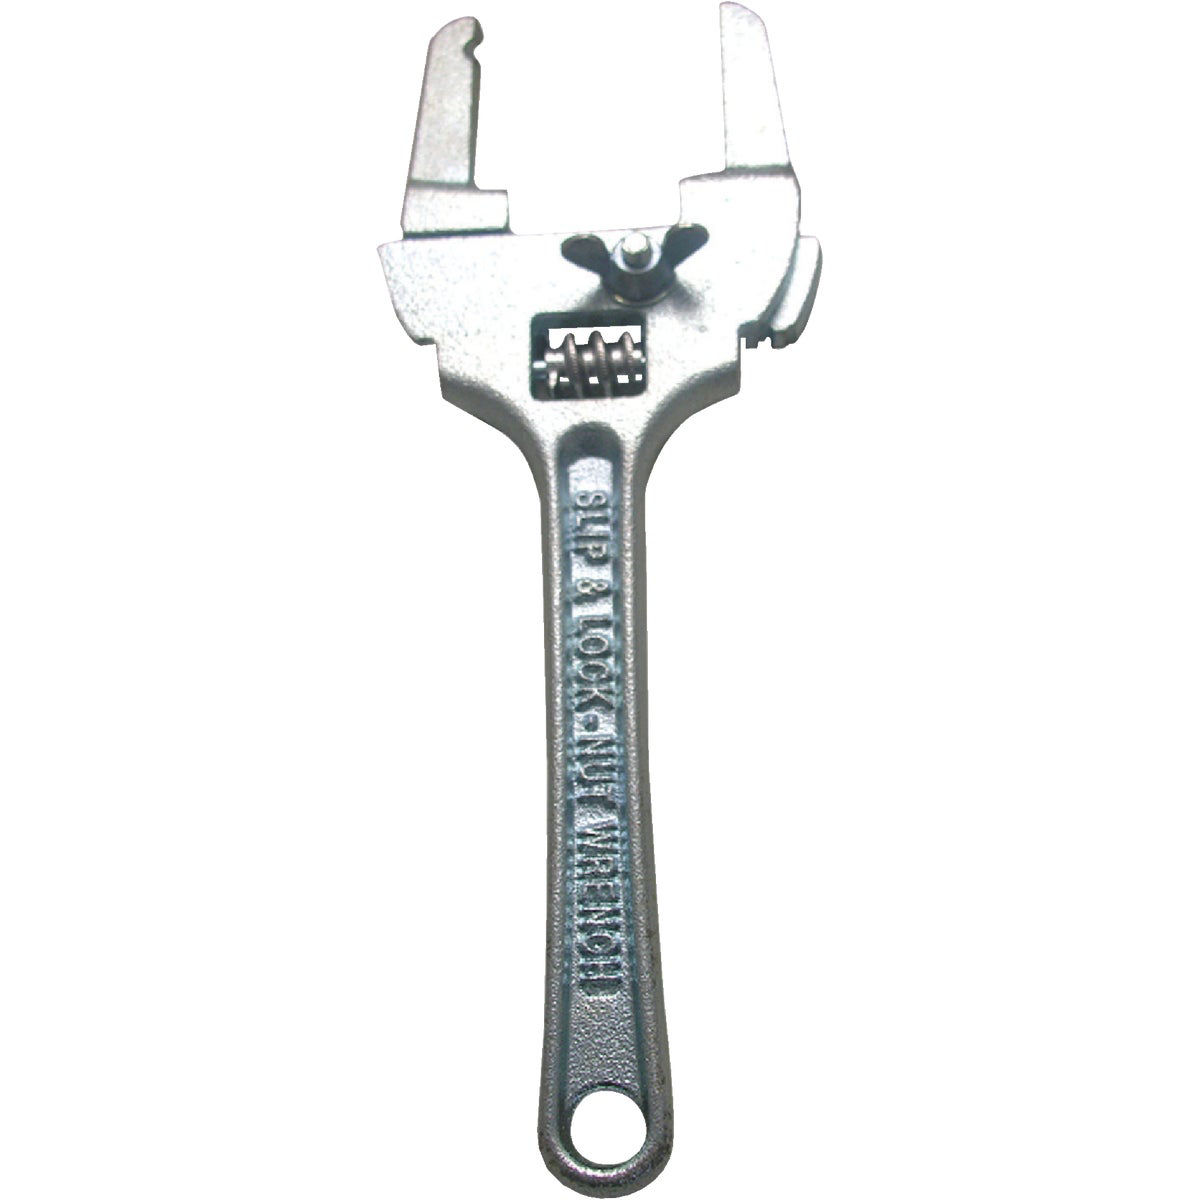 Lasco Adjustable 1 In. to 3 In. Steel Slip/Lock Nut Wrench